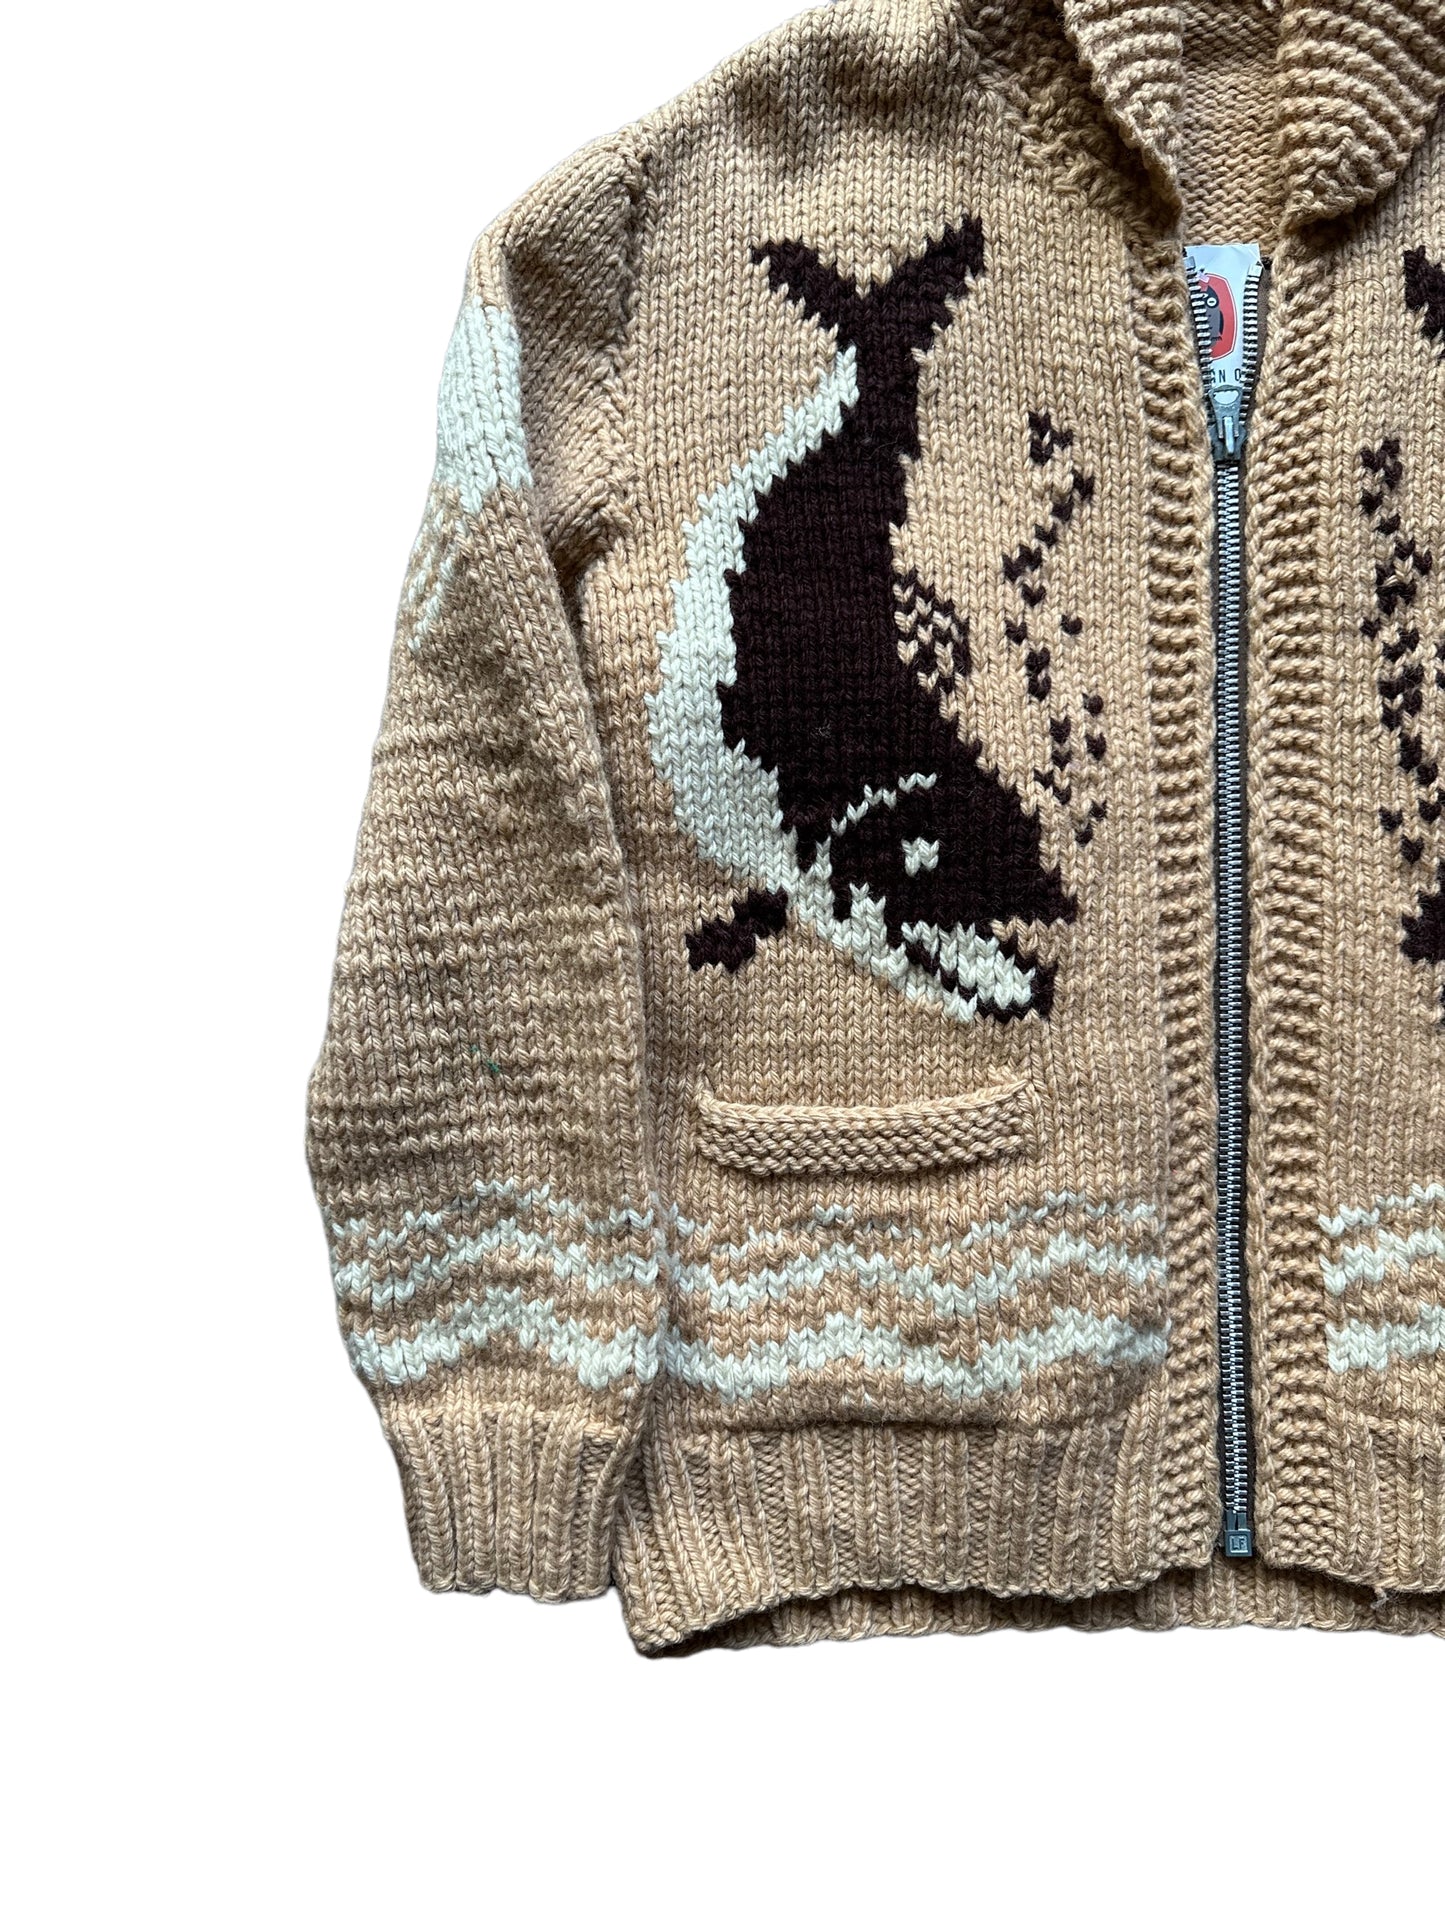 Vintage Wool Cowichan Style Salmon Sweater | Seattle Vintage Clothing |. Barn Owl Vintage Seattle